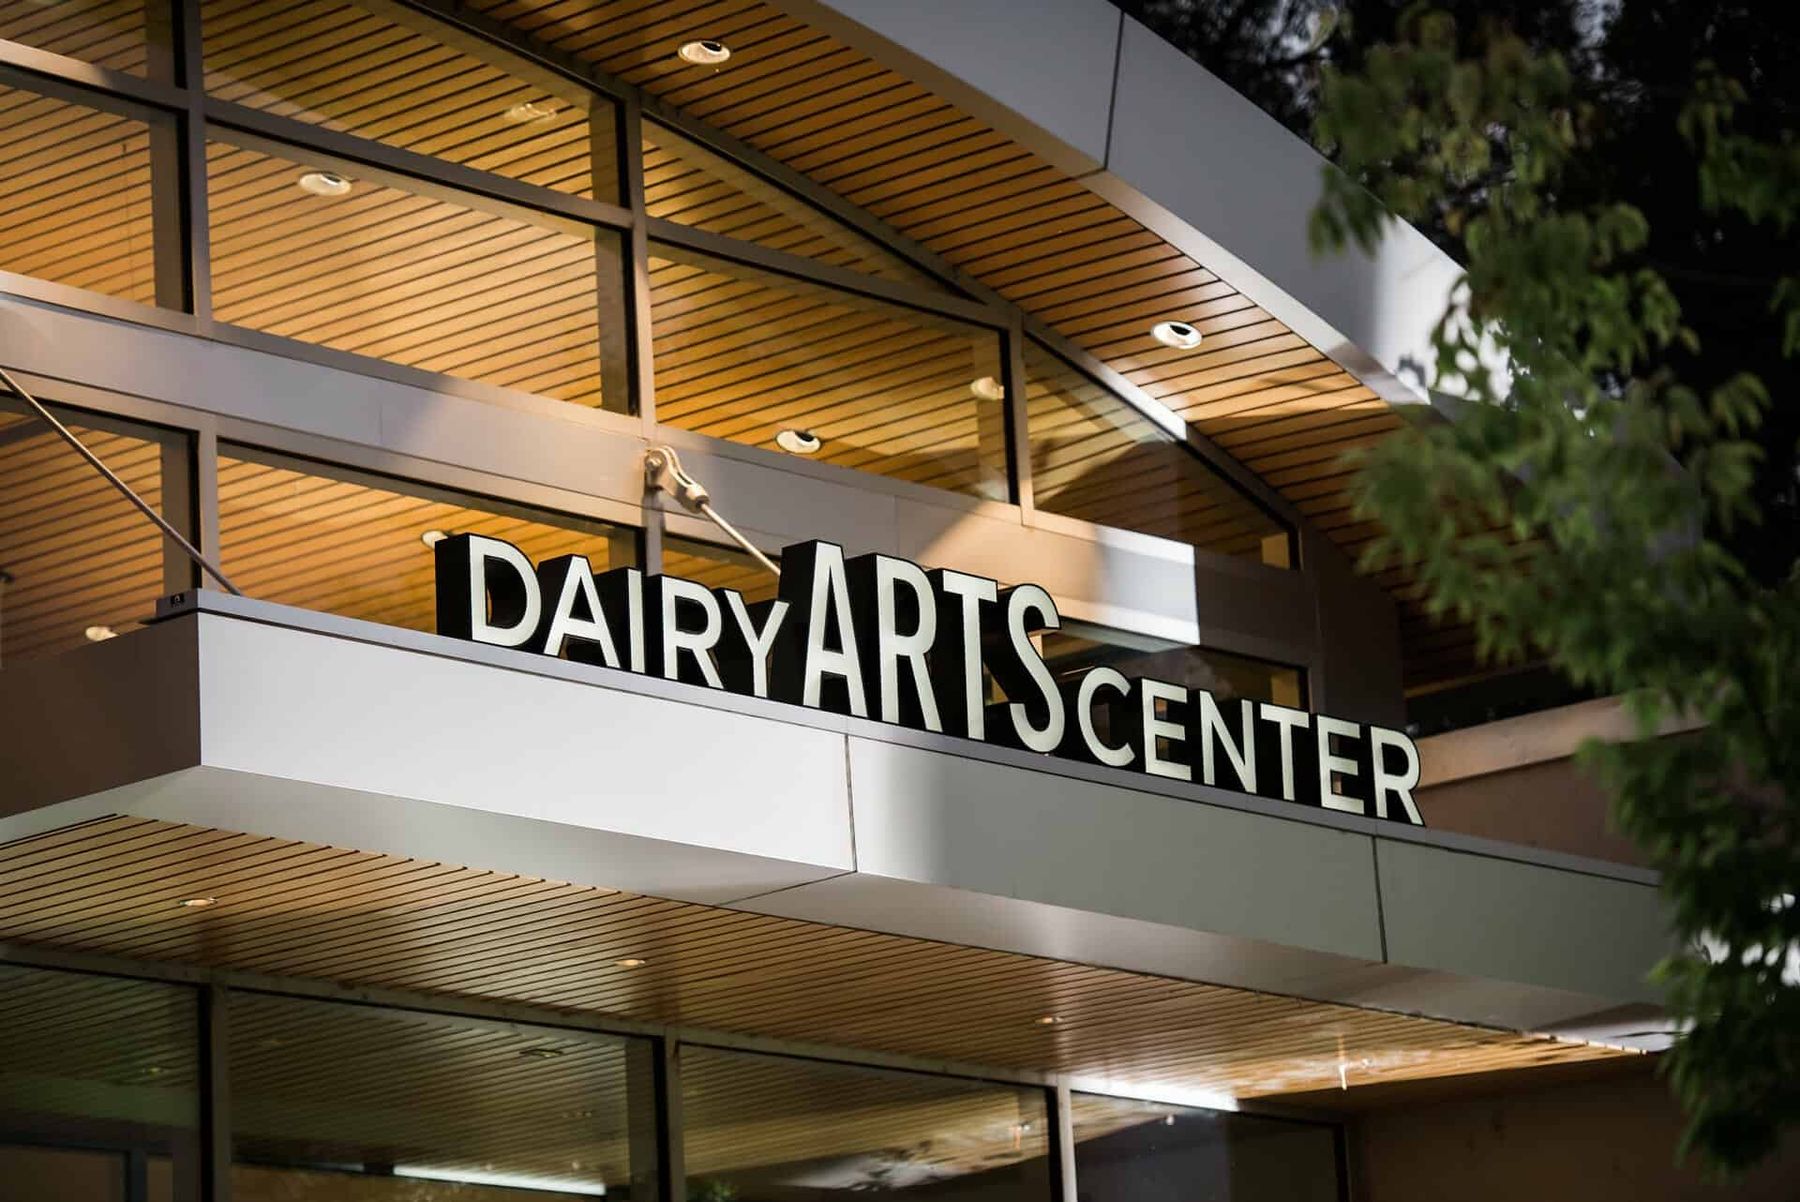 Exterior of Dairy Arts Center